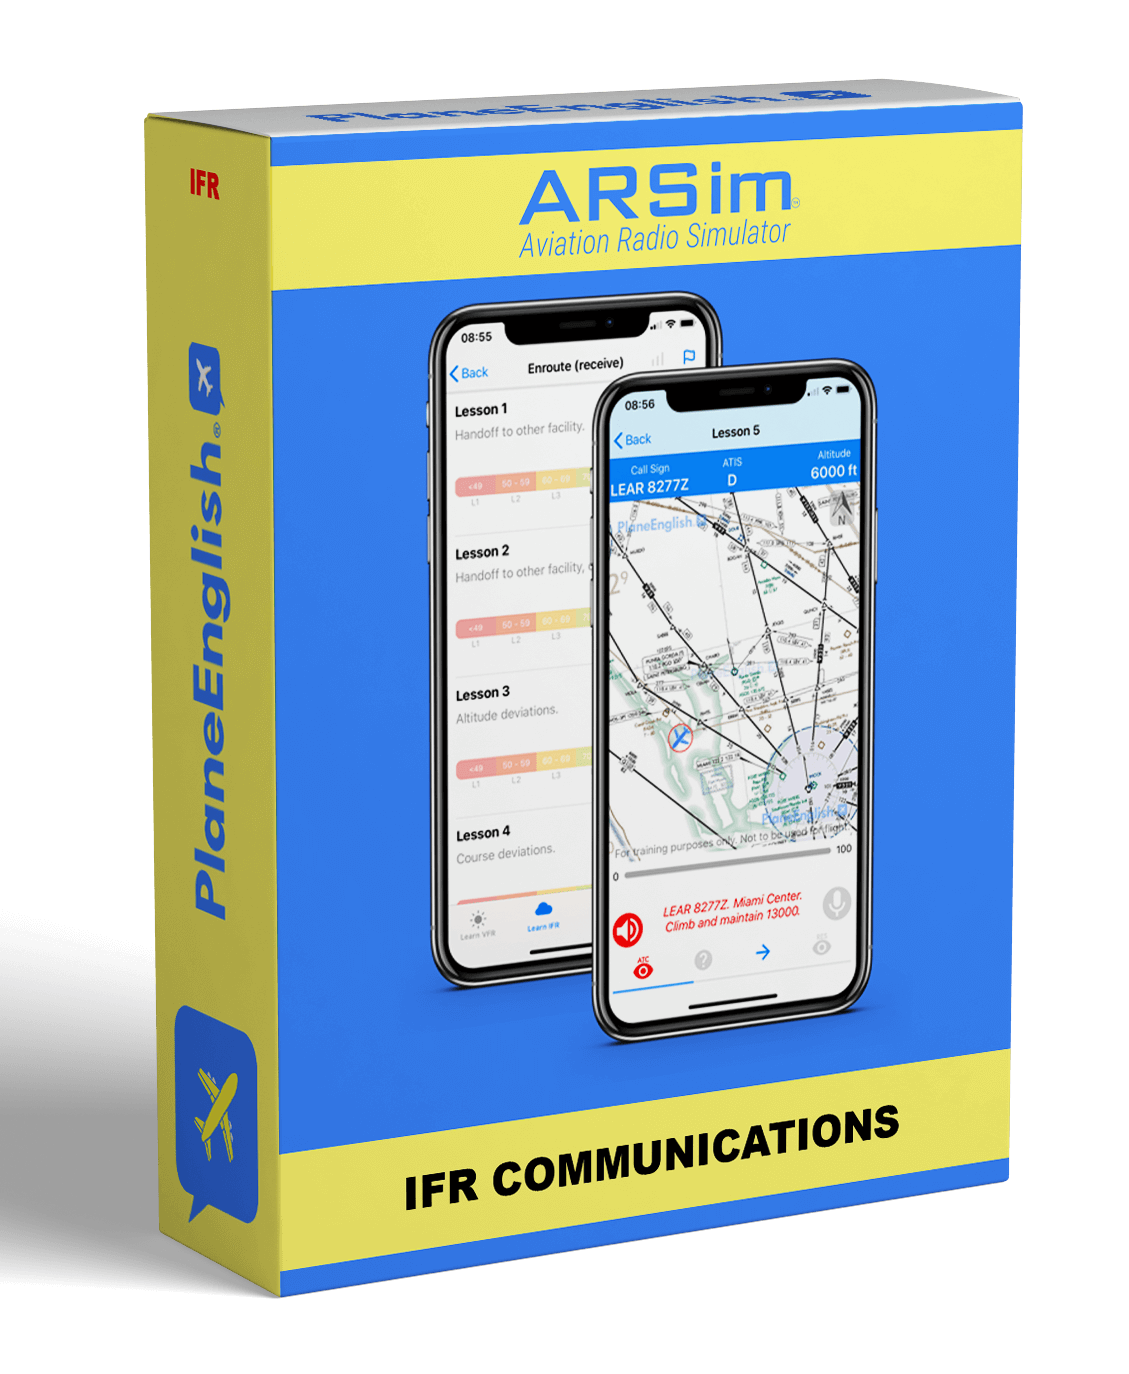 ARSim IFR Subscription Options